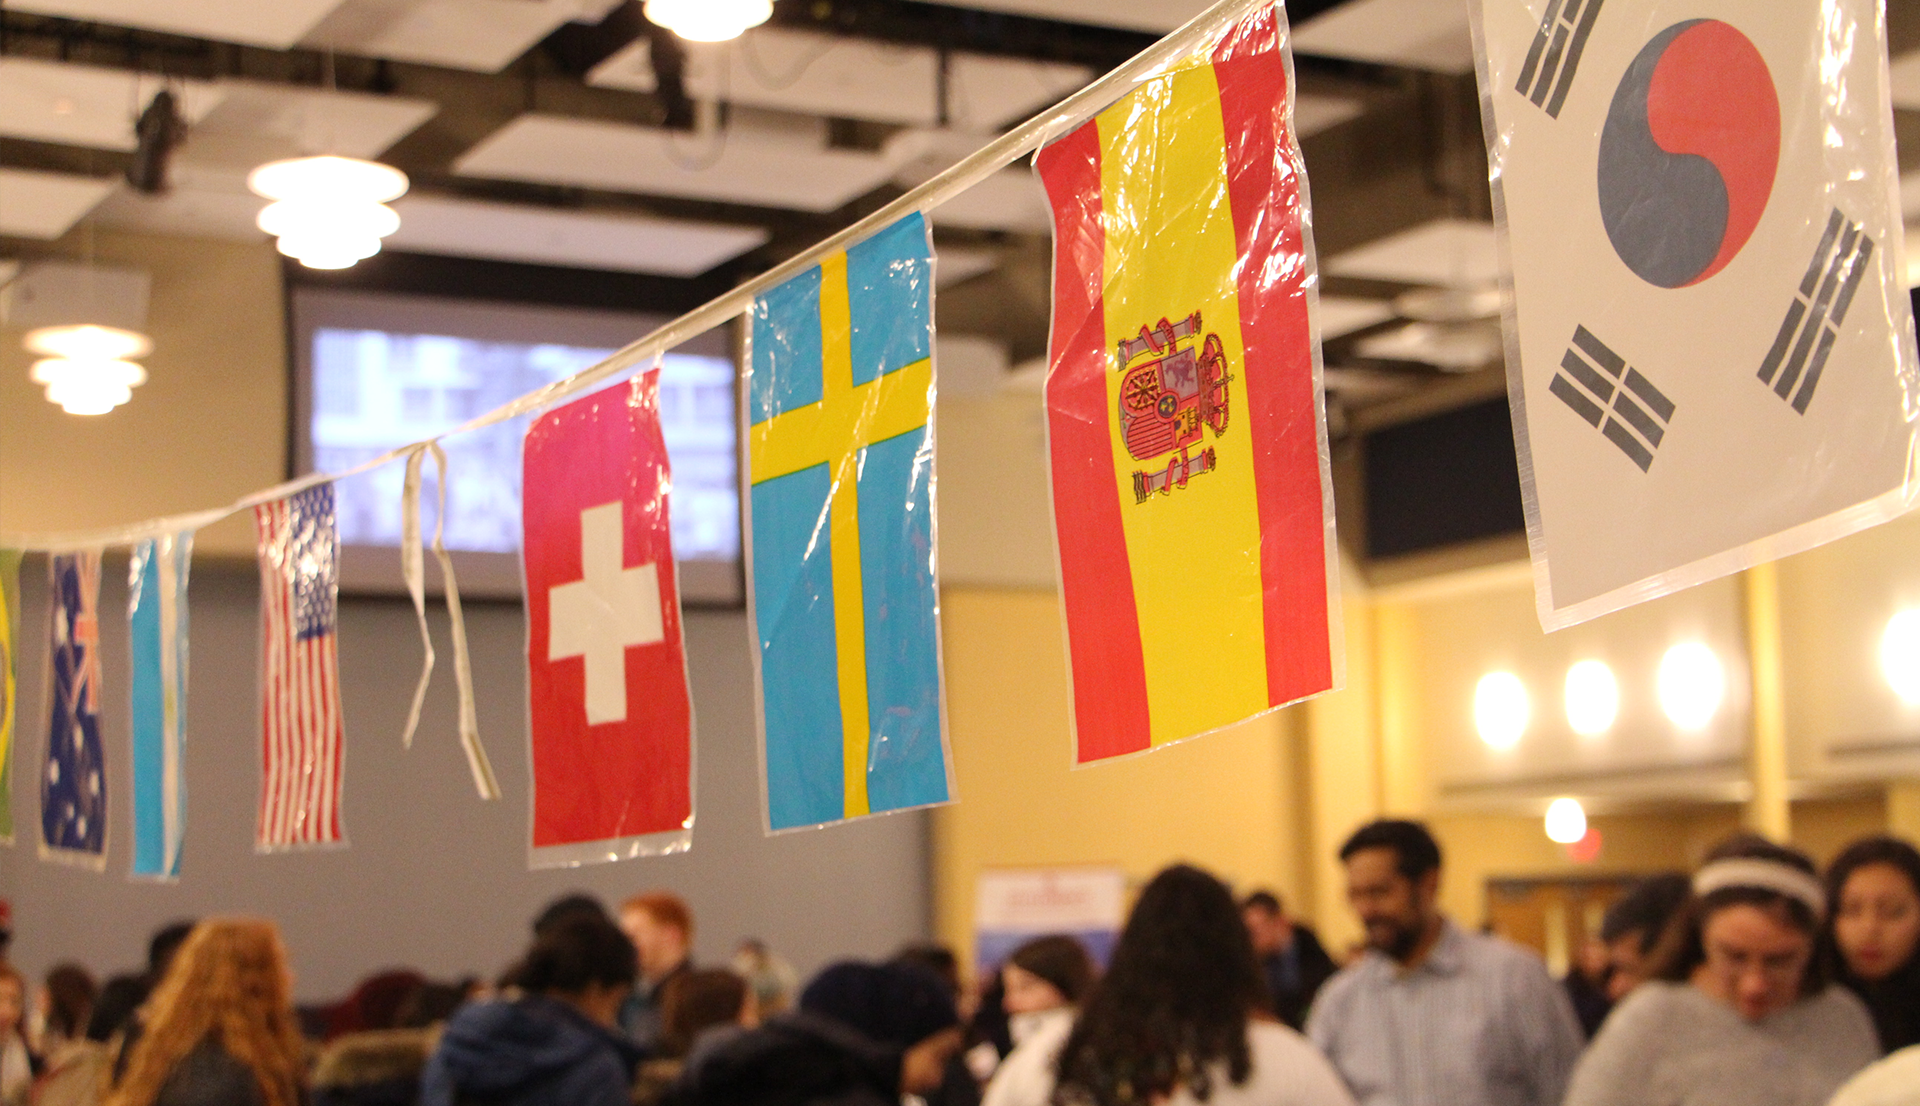 Rutgers Global - Spring 2019 Study Abroad Fair, Flags